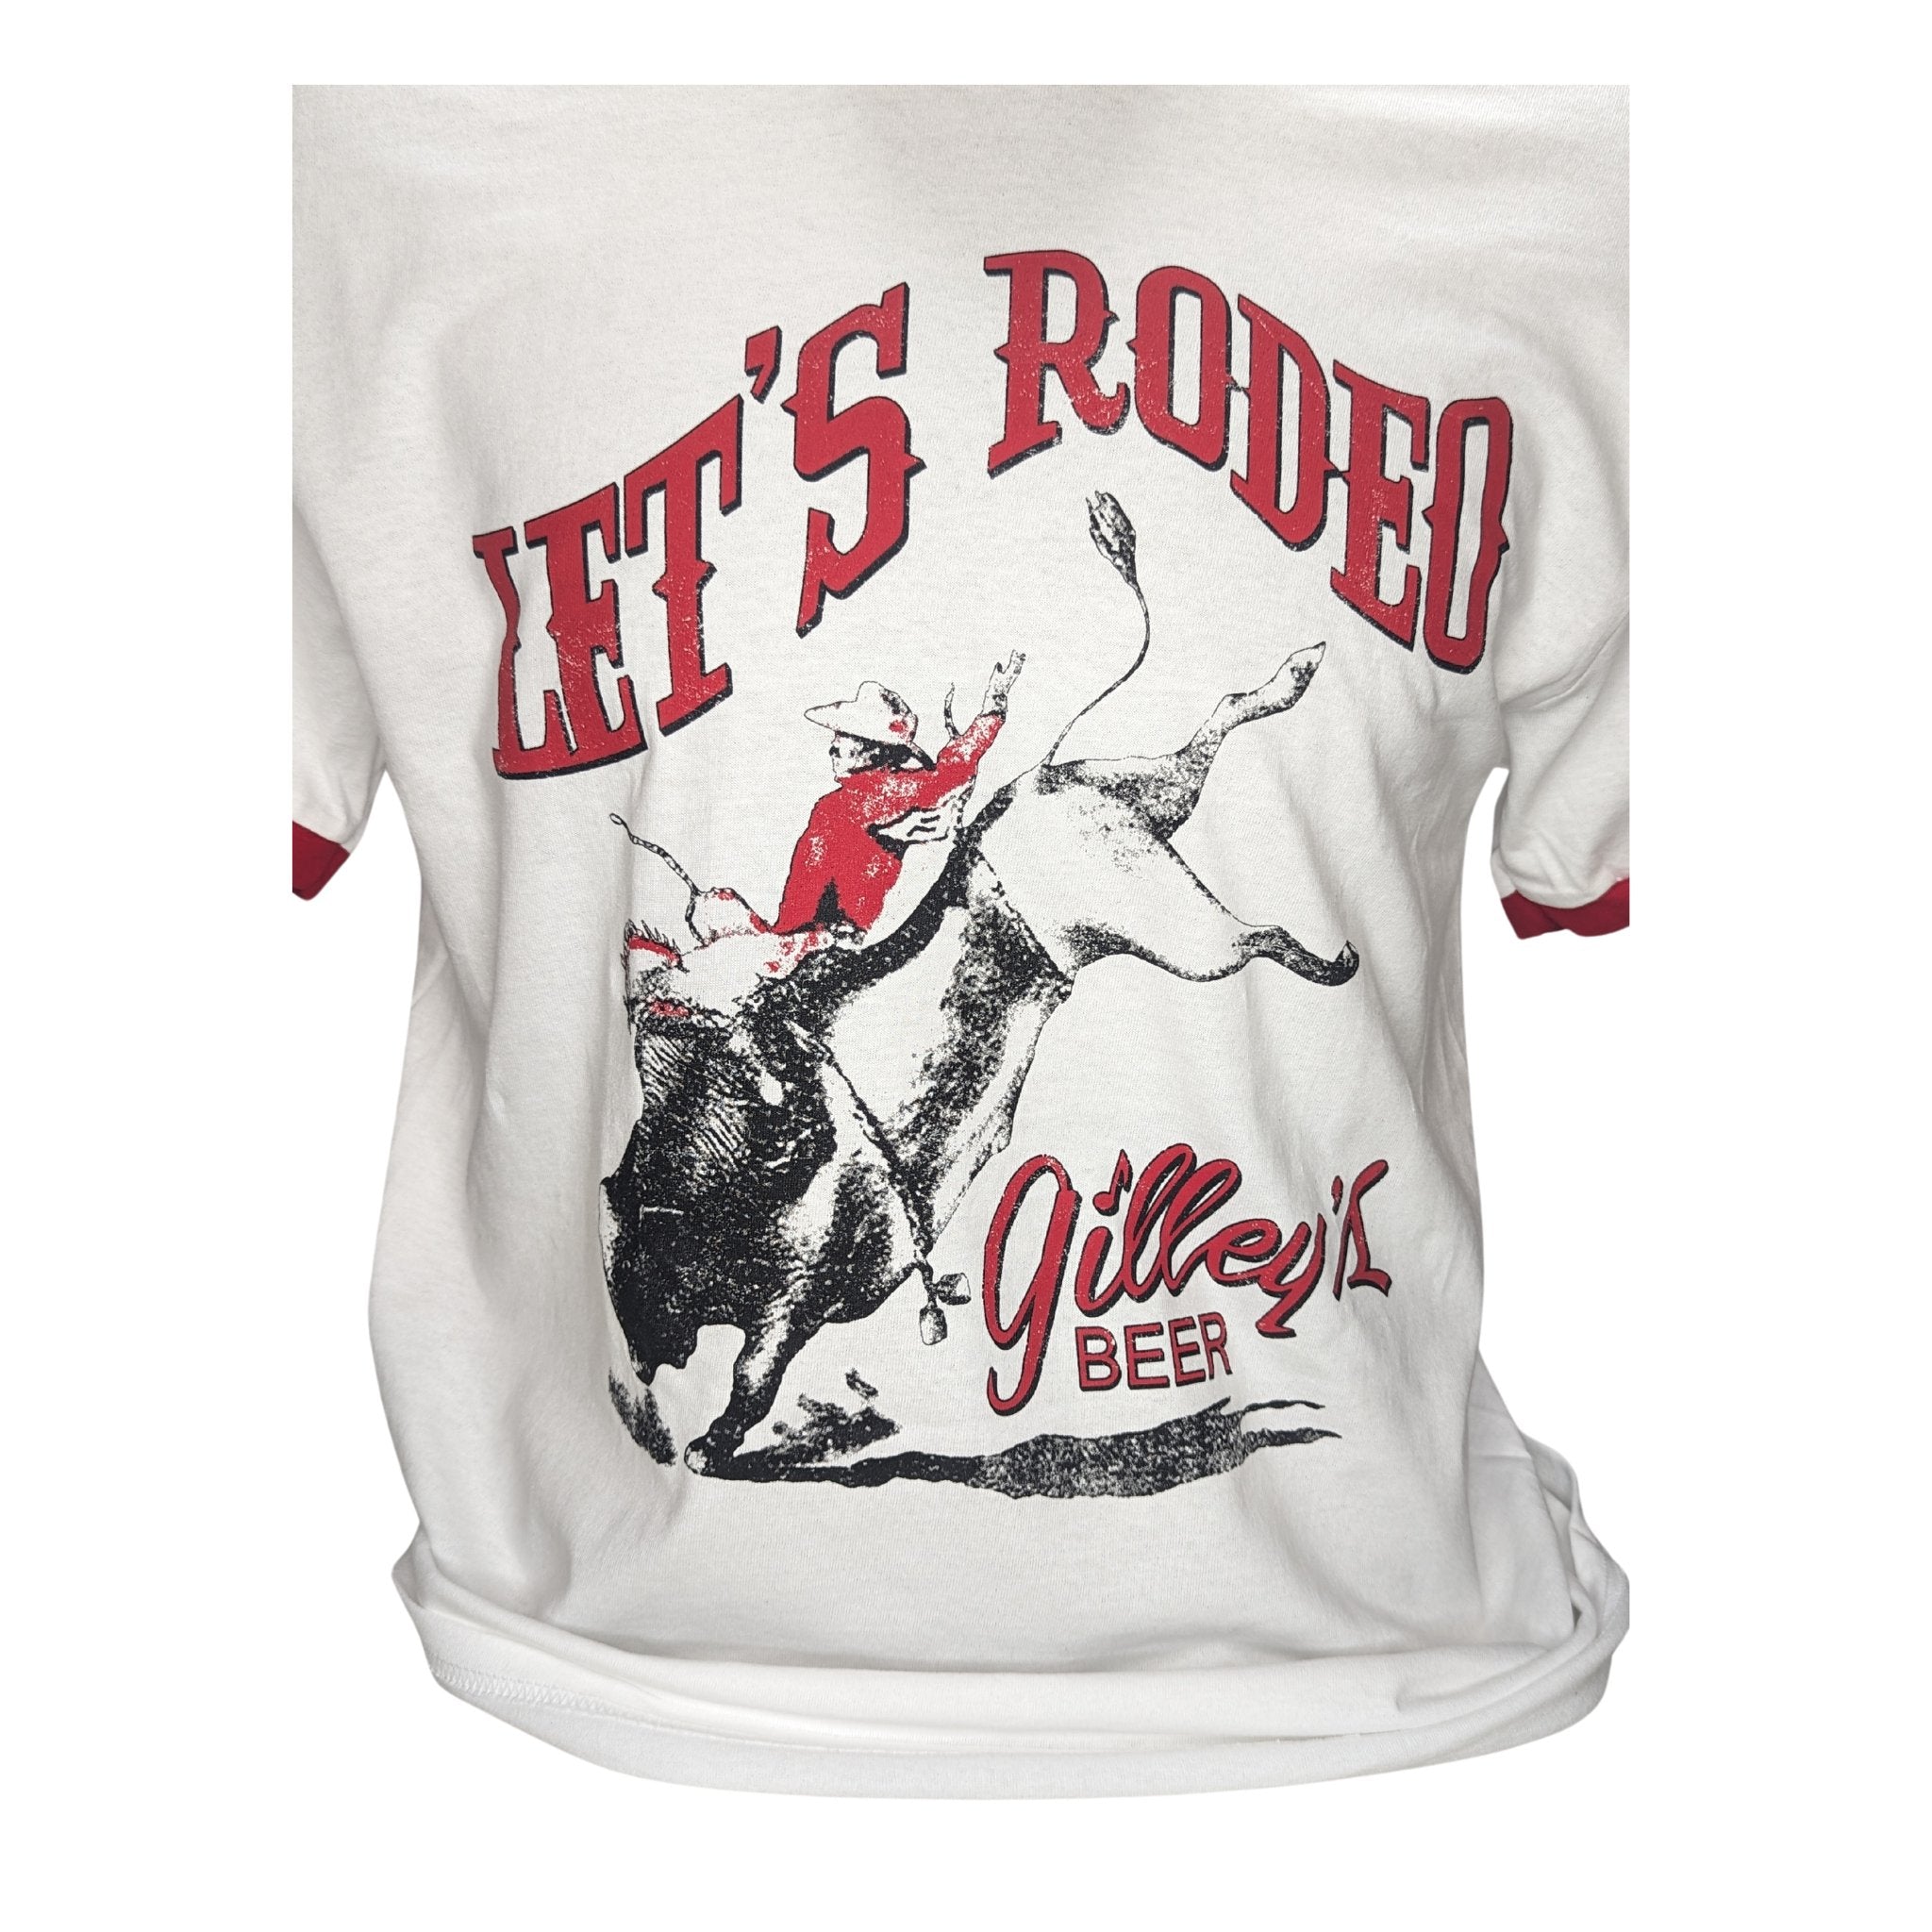 Gilley's Beer Rodeo Ringer Shirt - 100% Cotton Unisex Shirt - Gilley's Food & Beverage